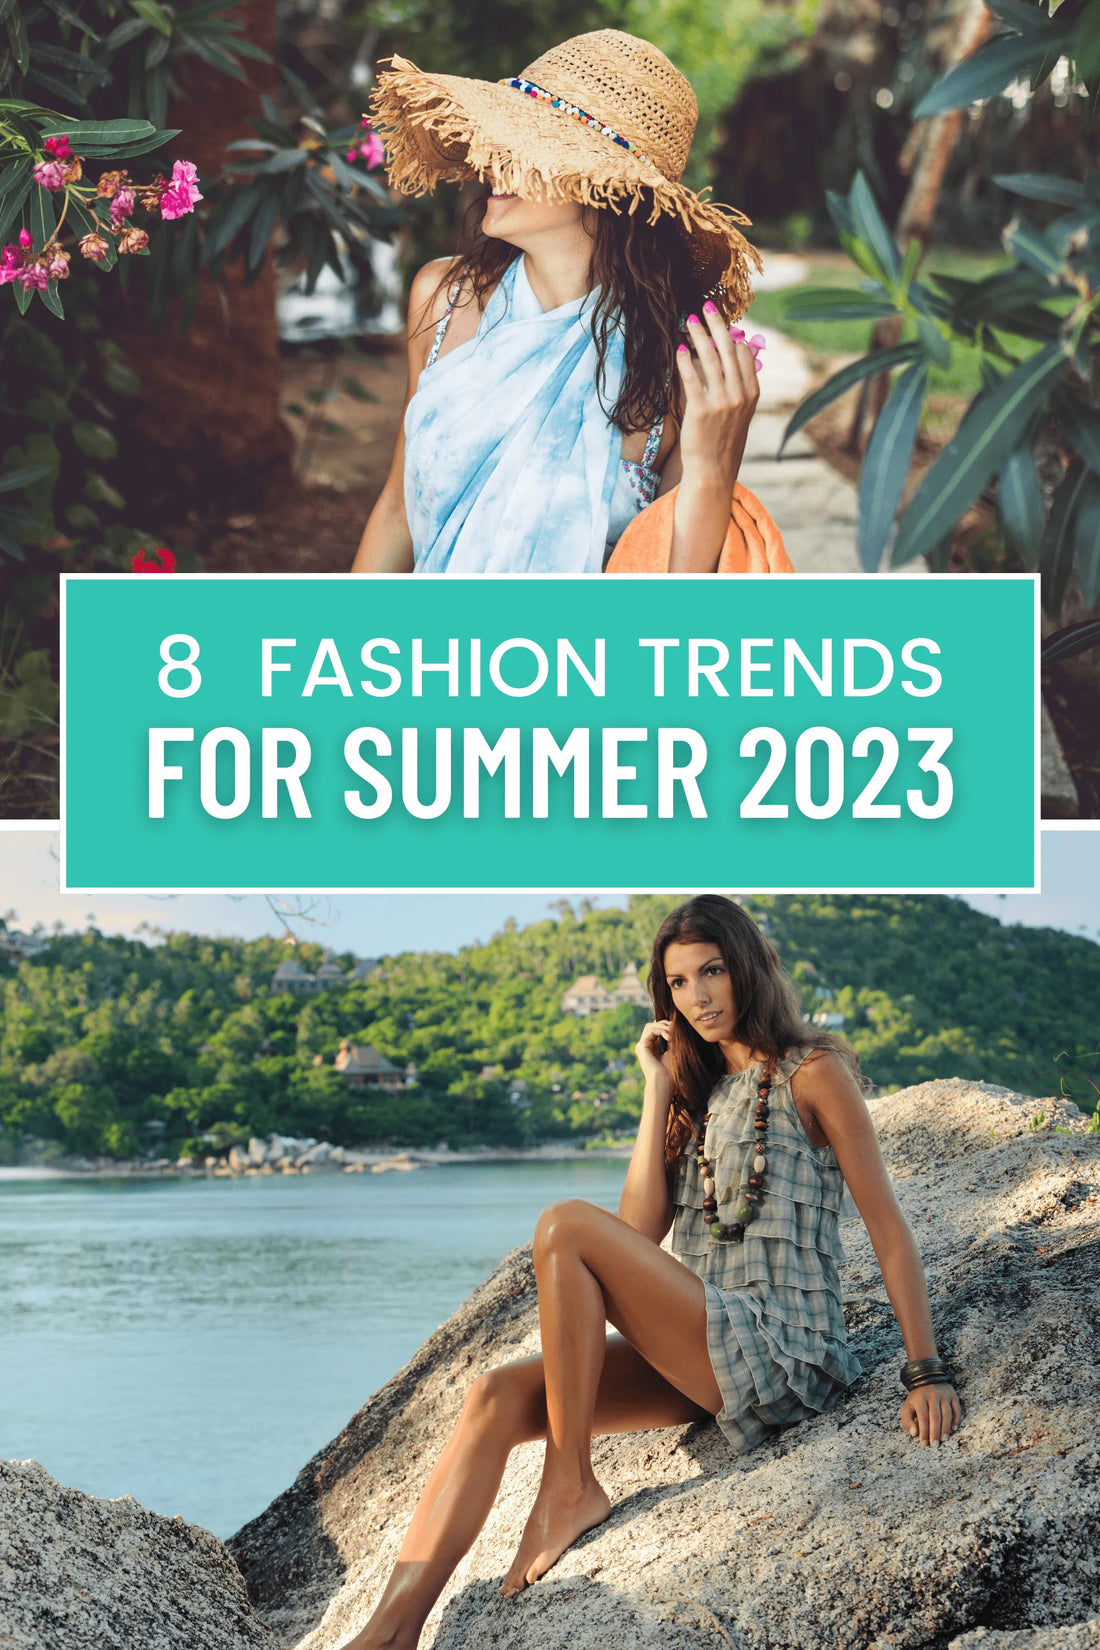 Summer Fashion 2023: